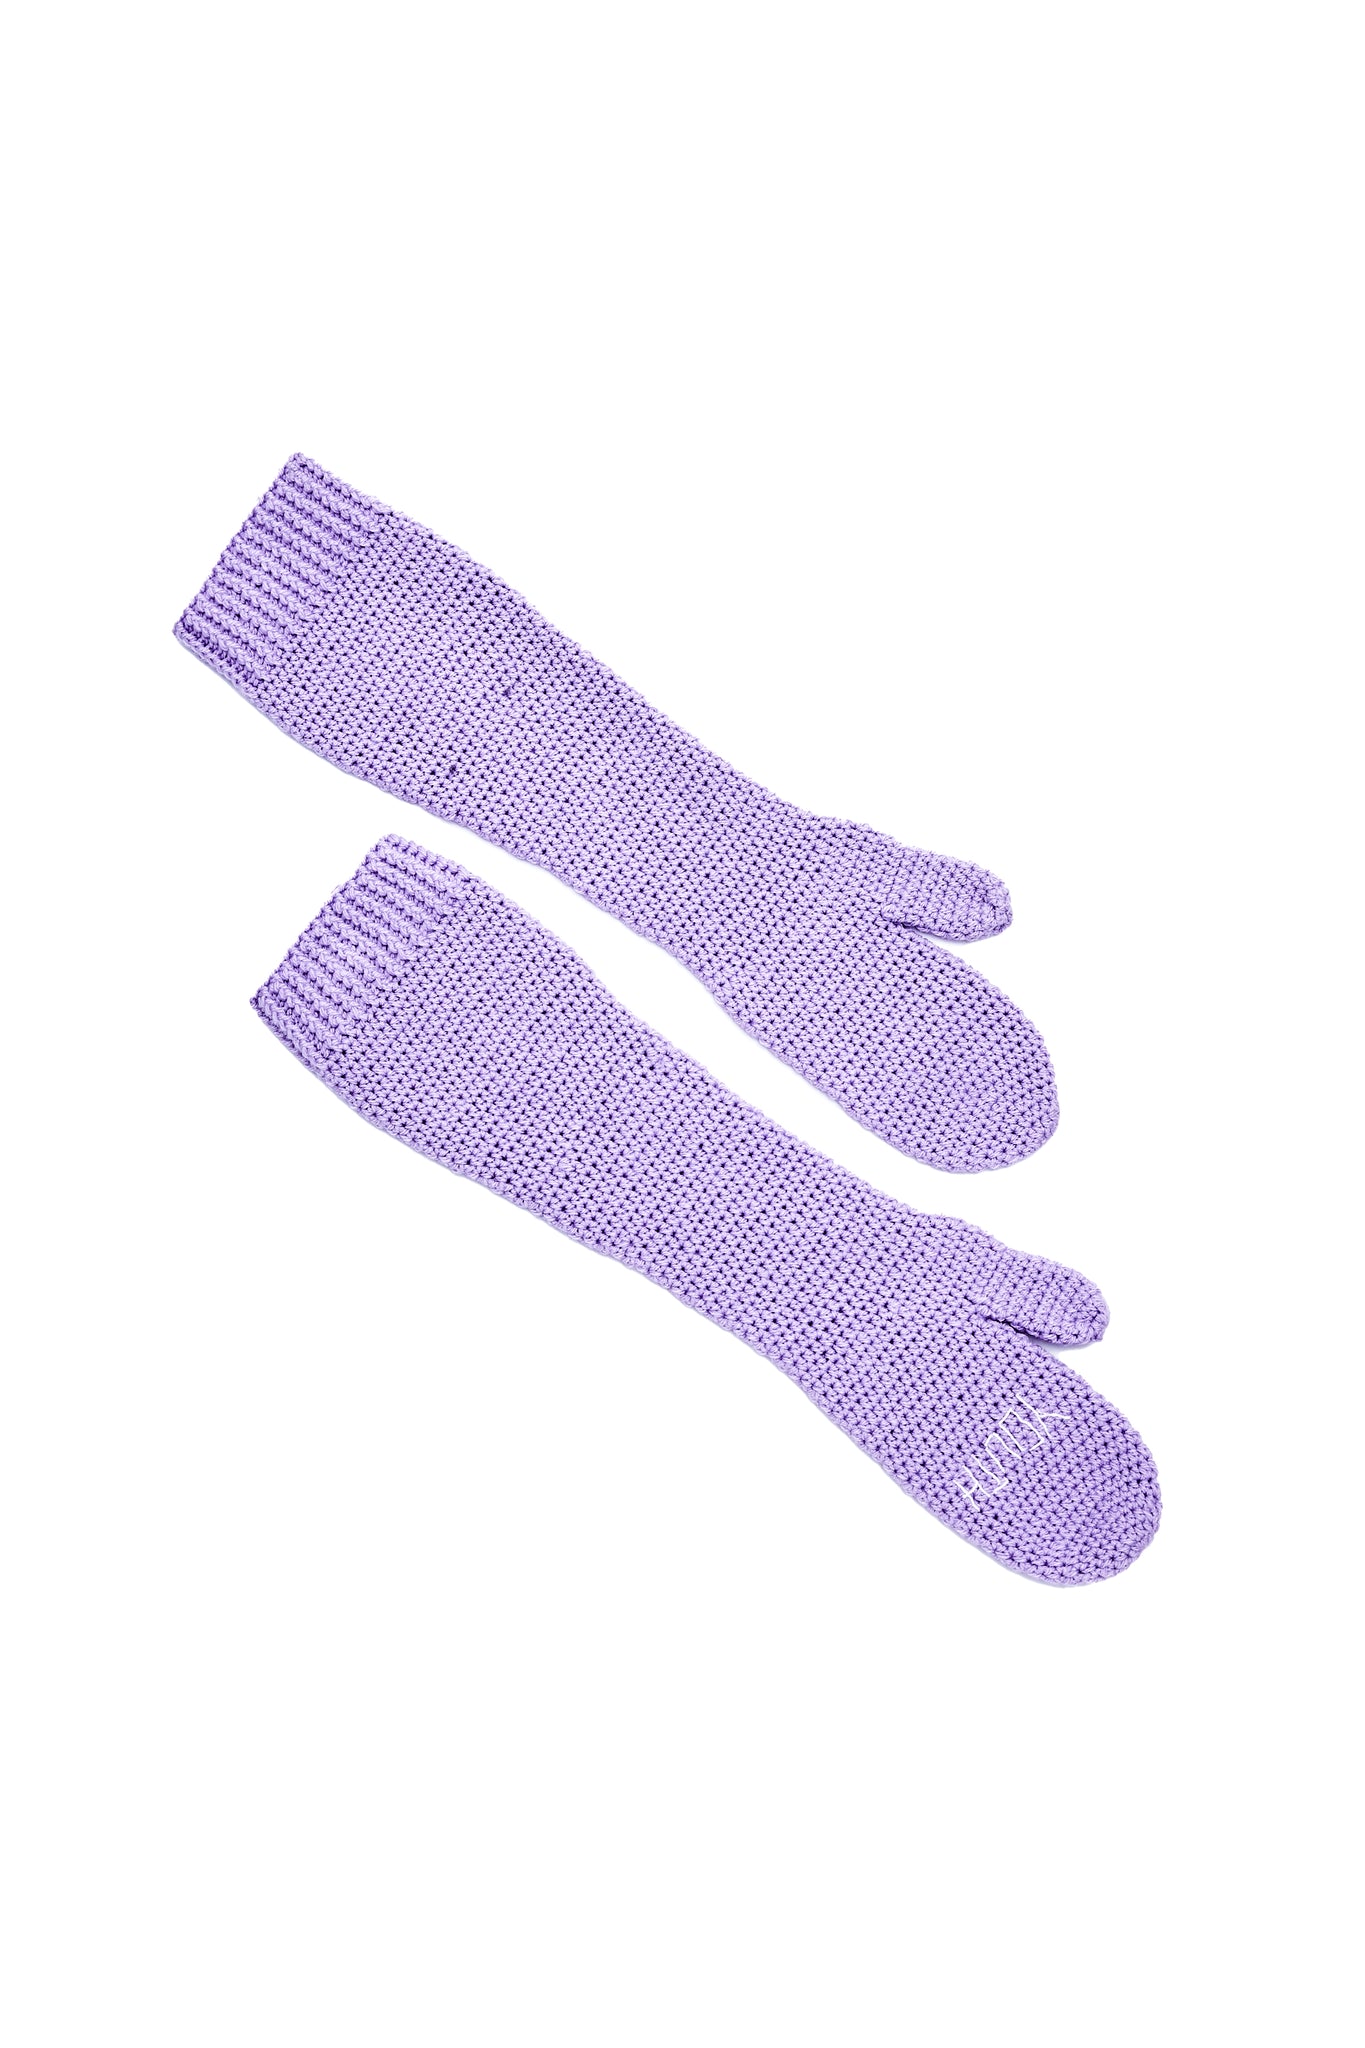 Mens Handmade Gloves Knit Lilac